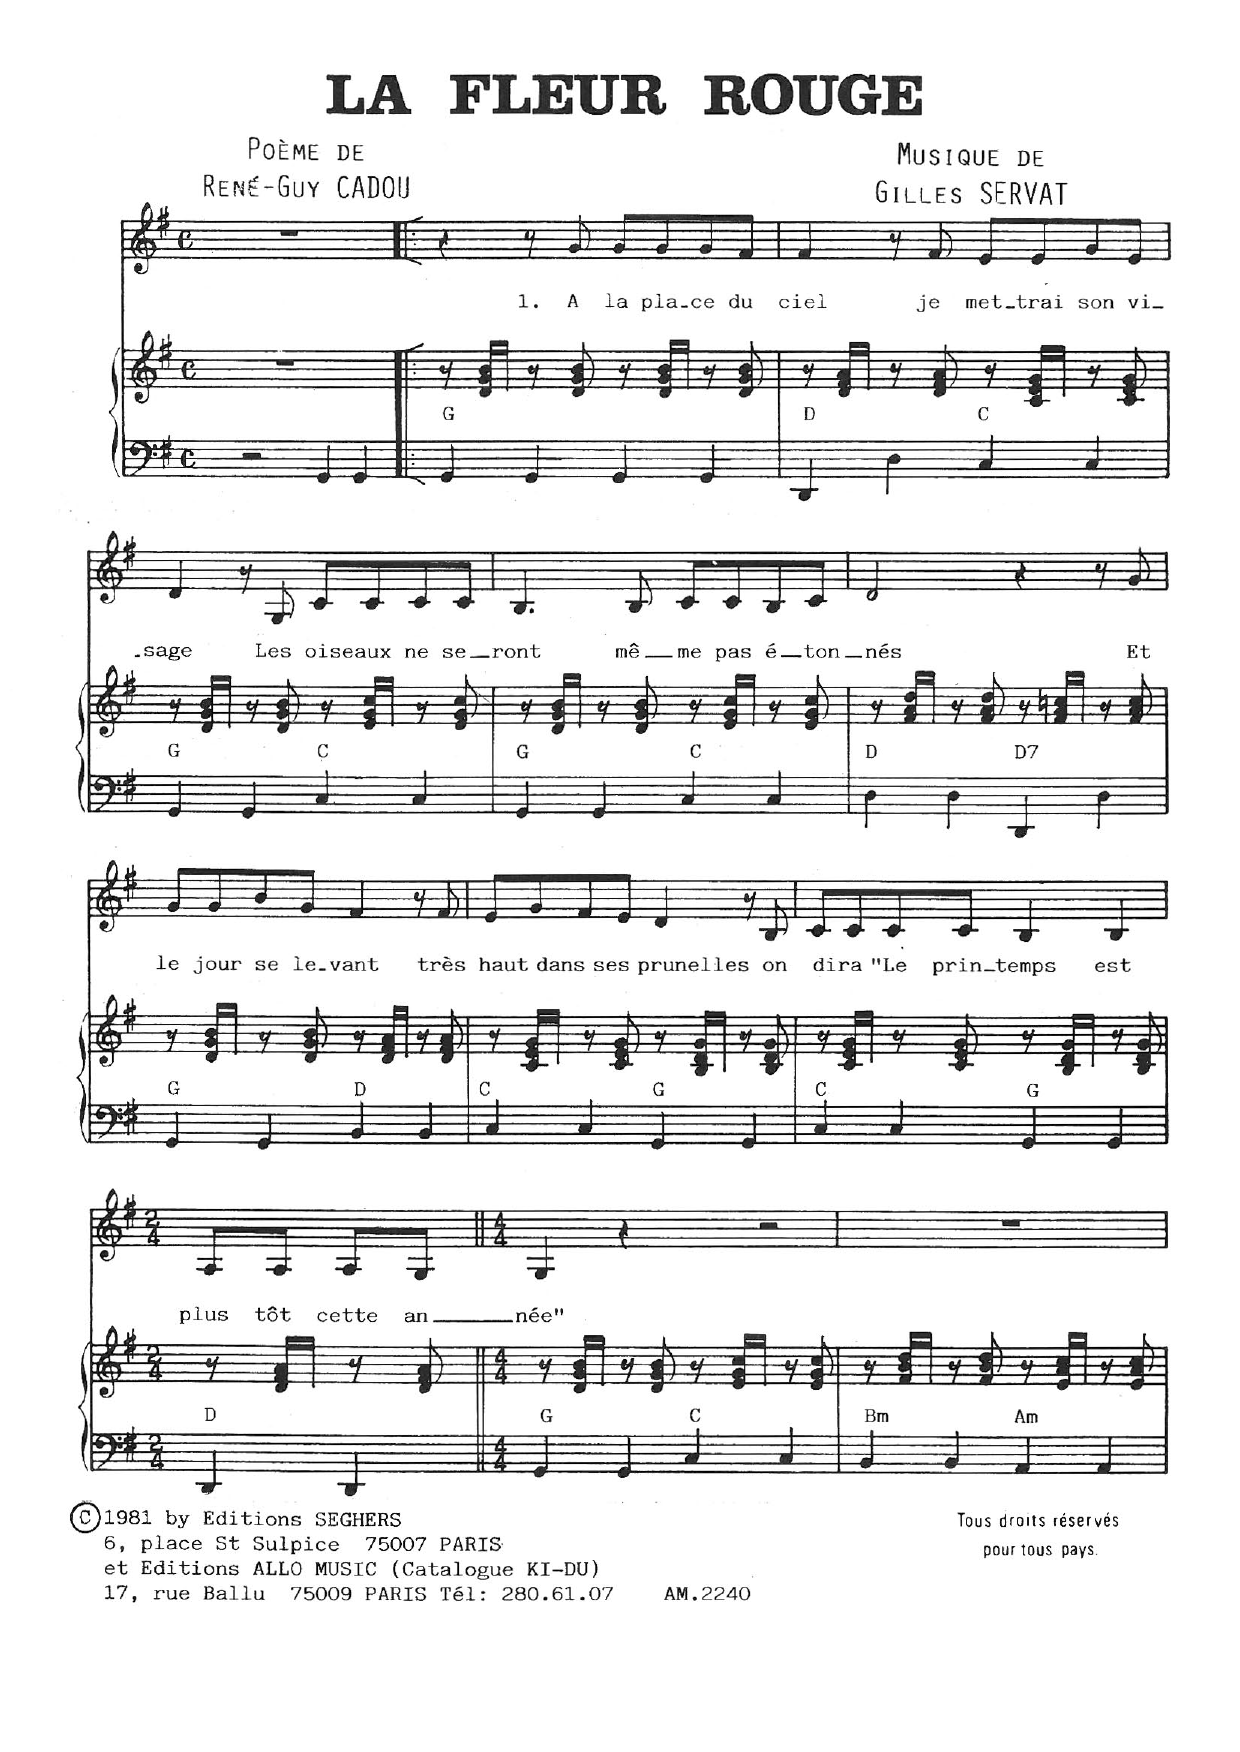 Gilles Servat La Fleur Rouge Sheet Music Notes & Chords for Piano & Vocal - Download or Print PDF